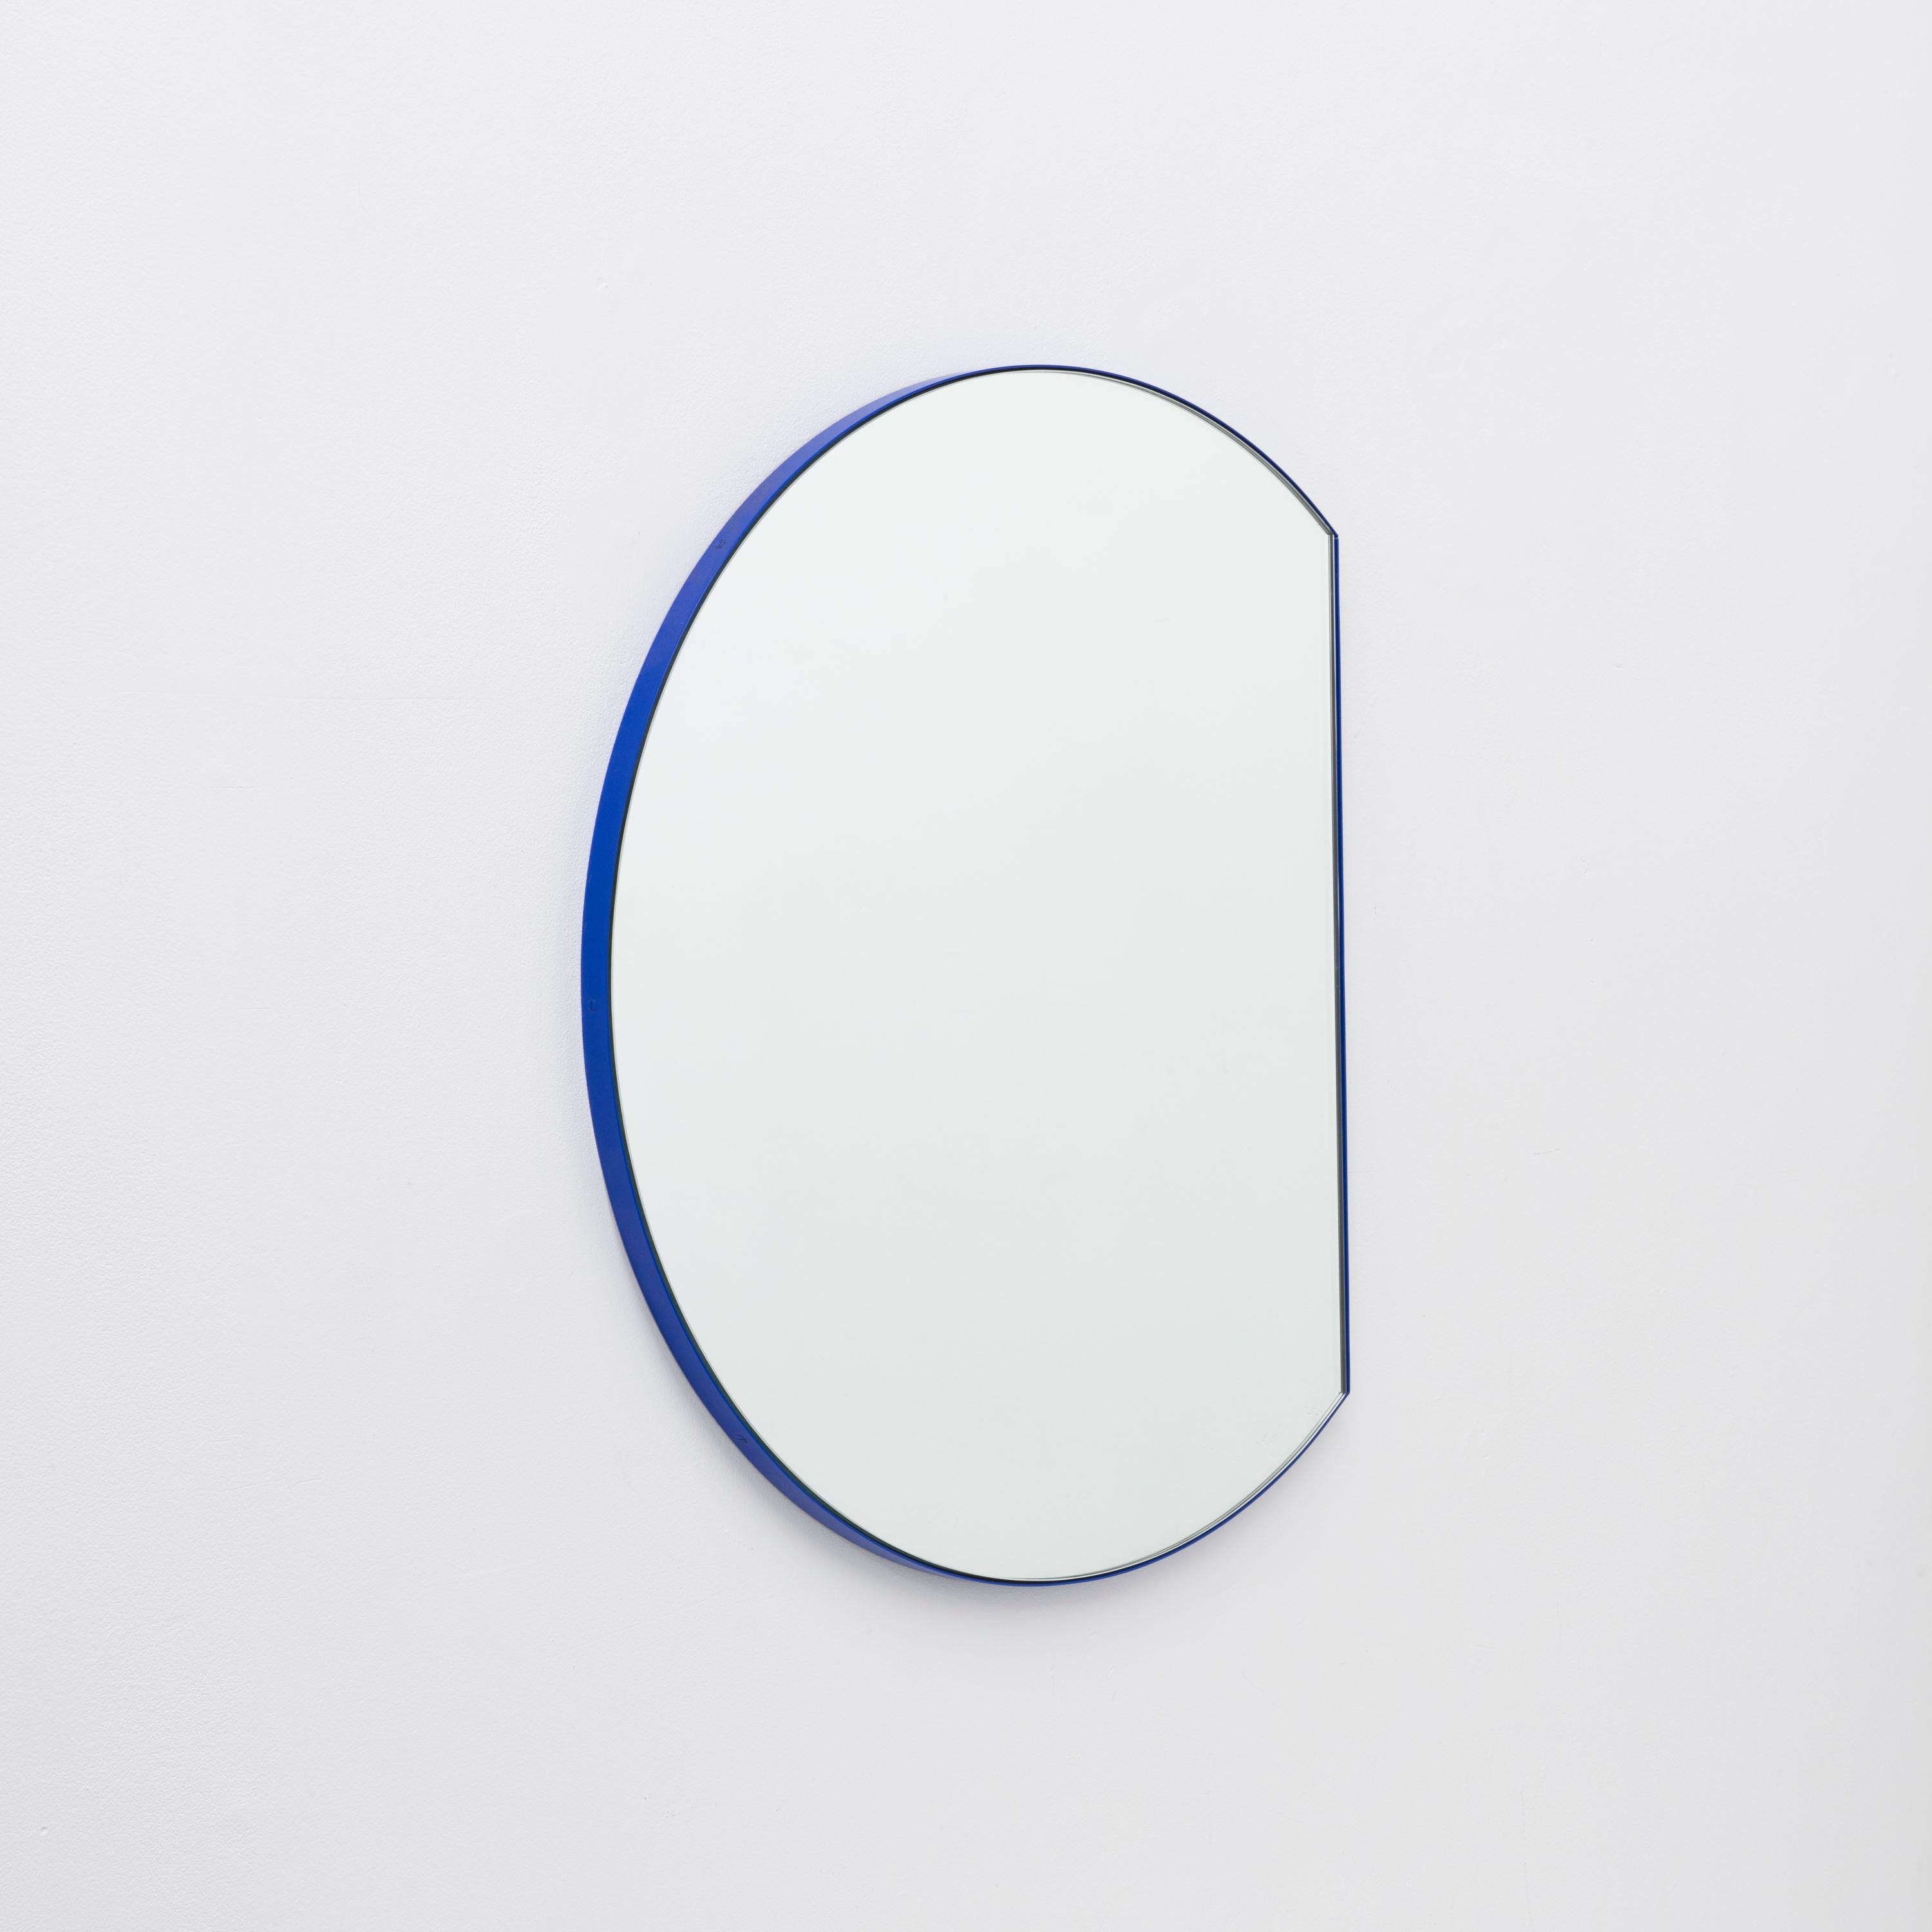 Britannique Miroir circulaire moderne court Orbis Trecus avec cadre bleu, standard en vente